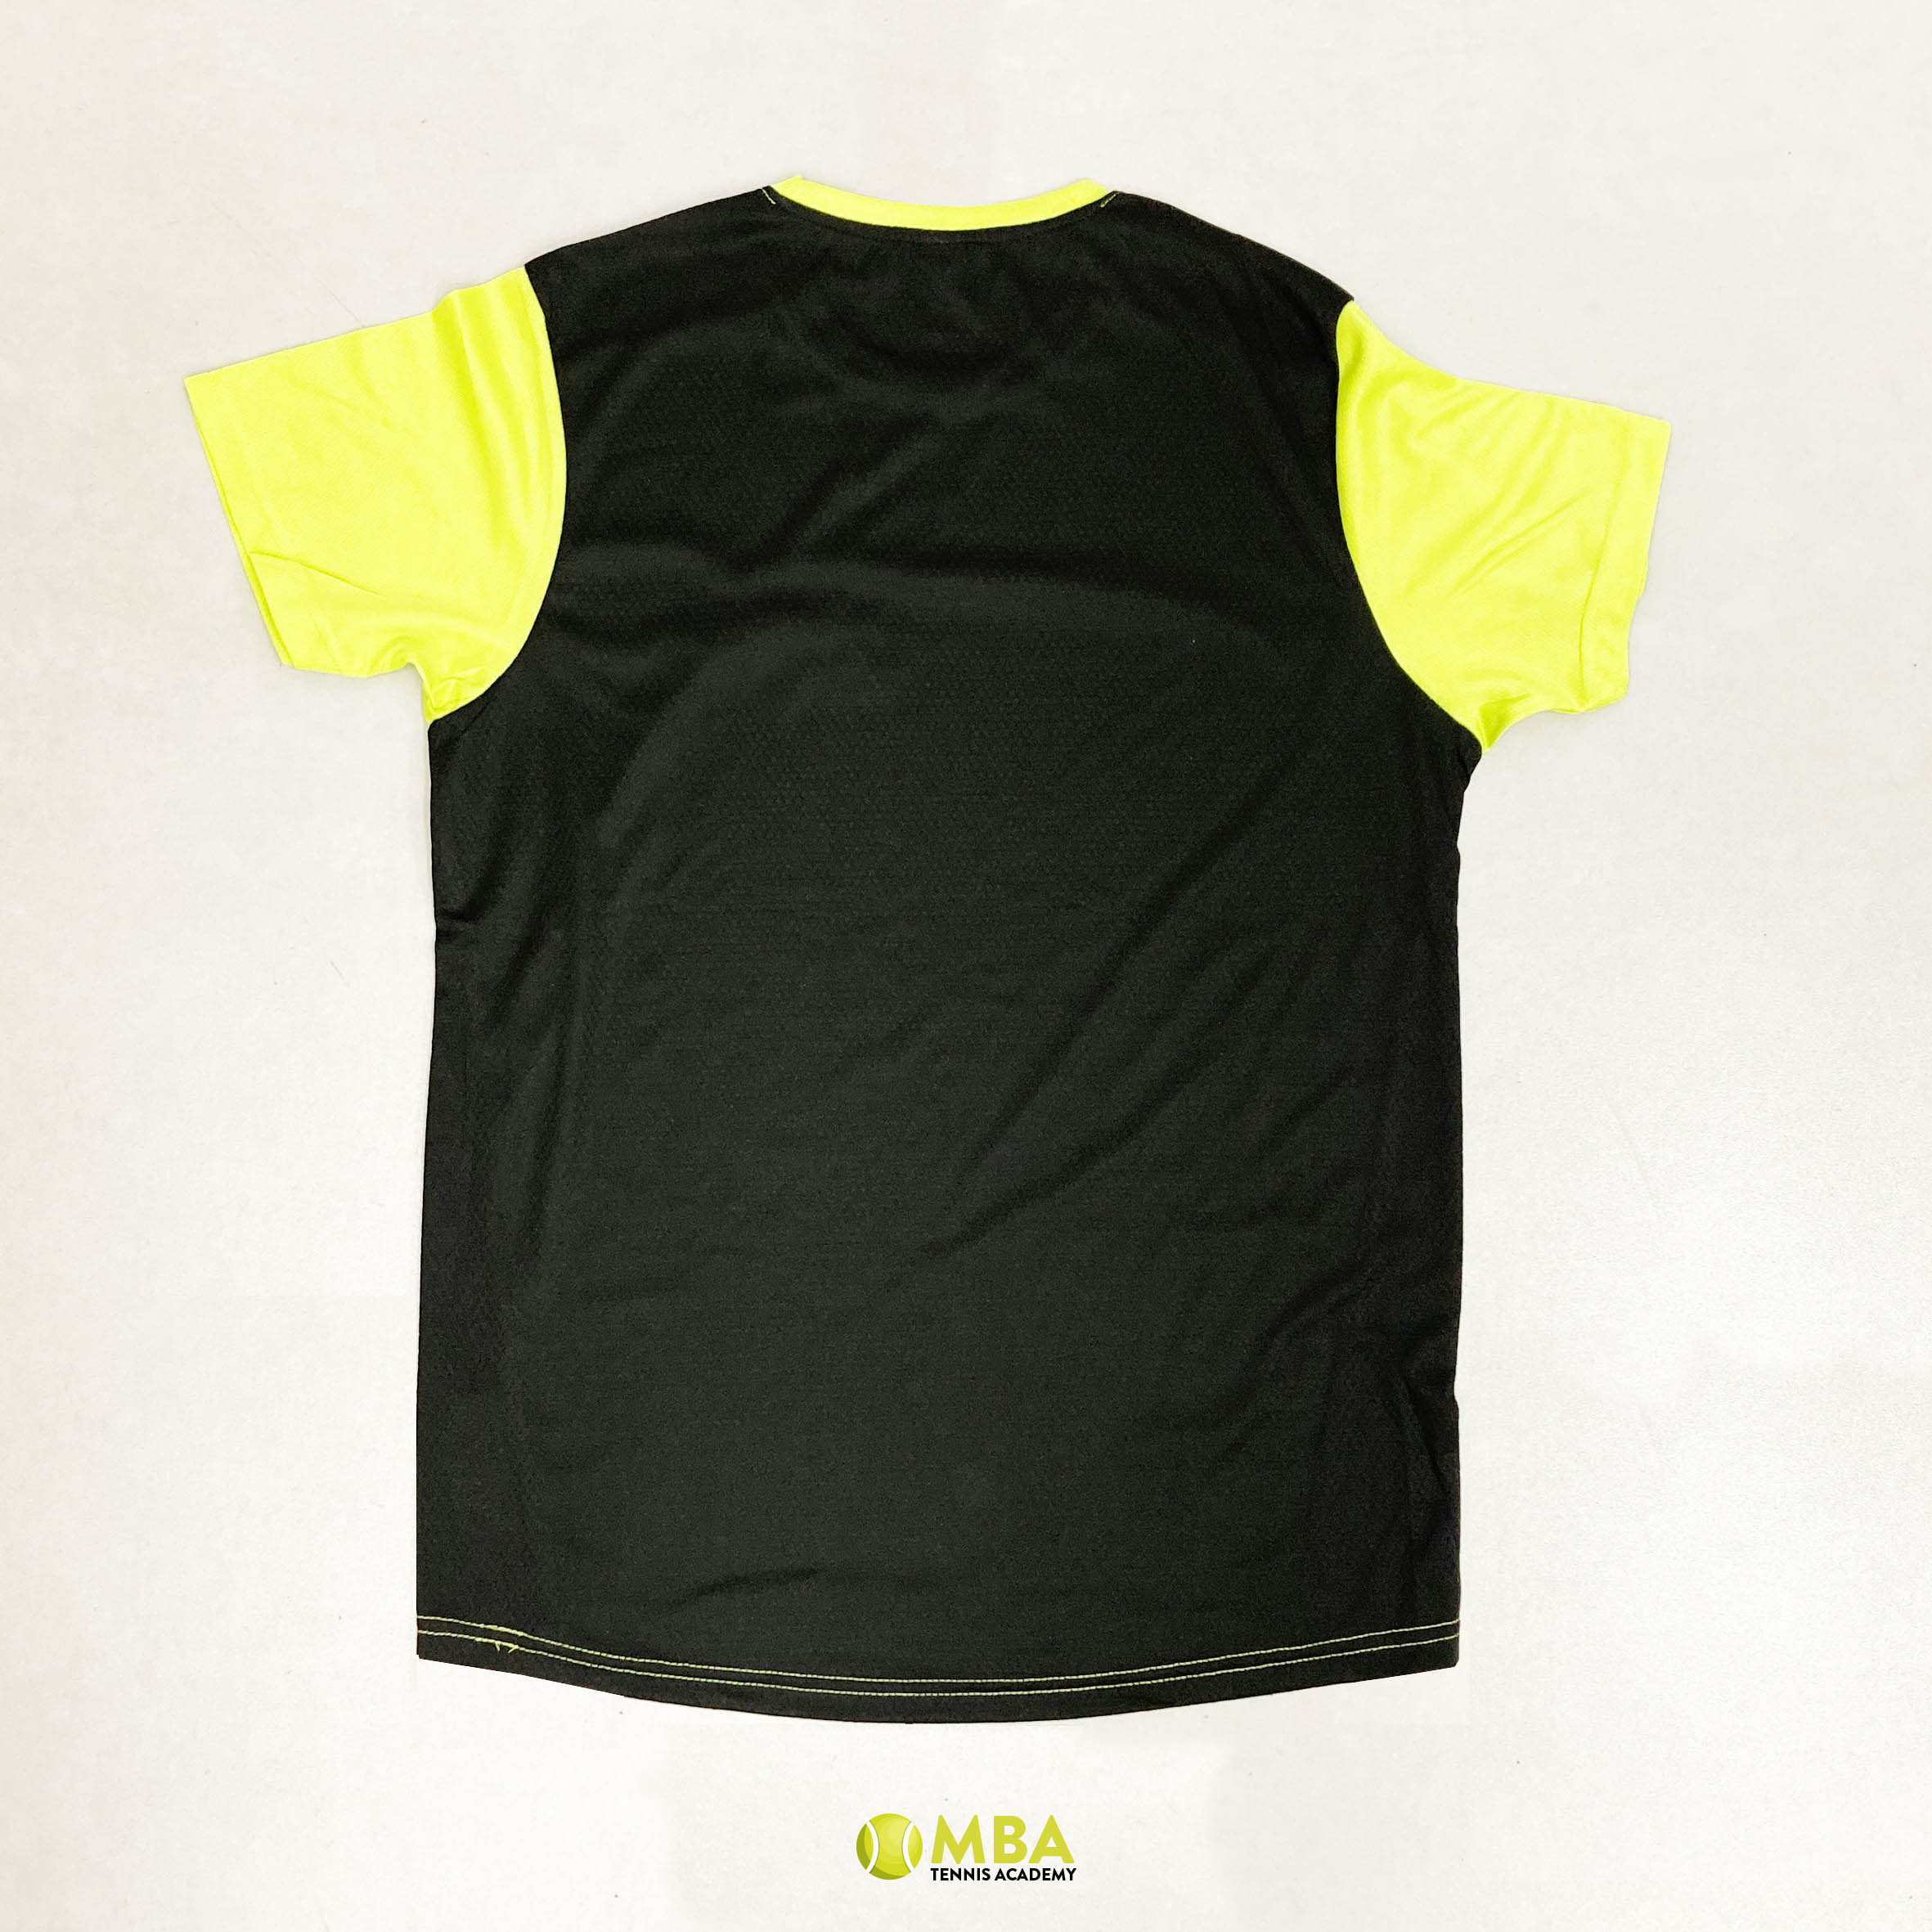 MBA-Tennis-Academy--camiseta-lima-hombre-manga-corta-3